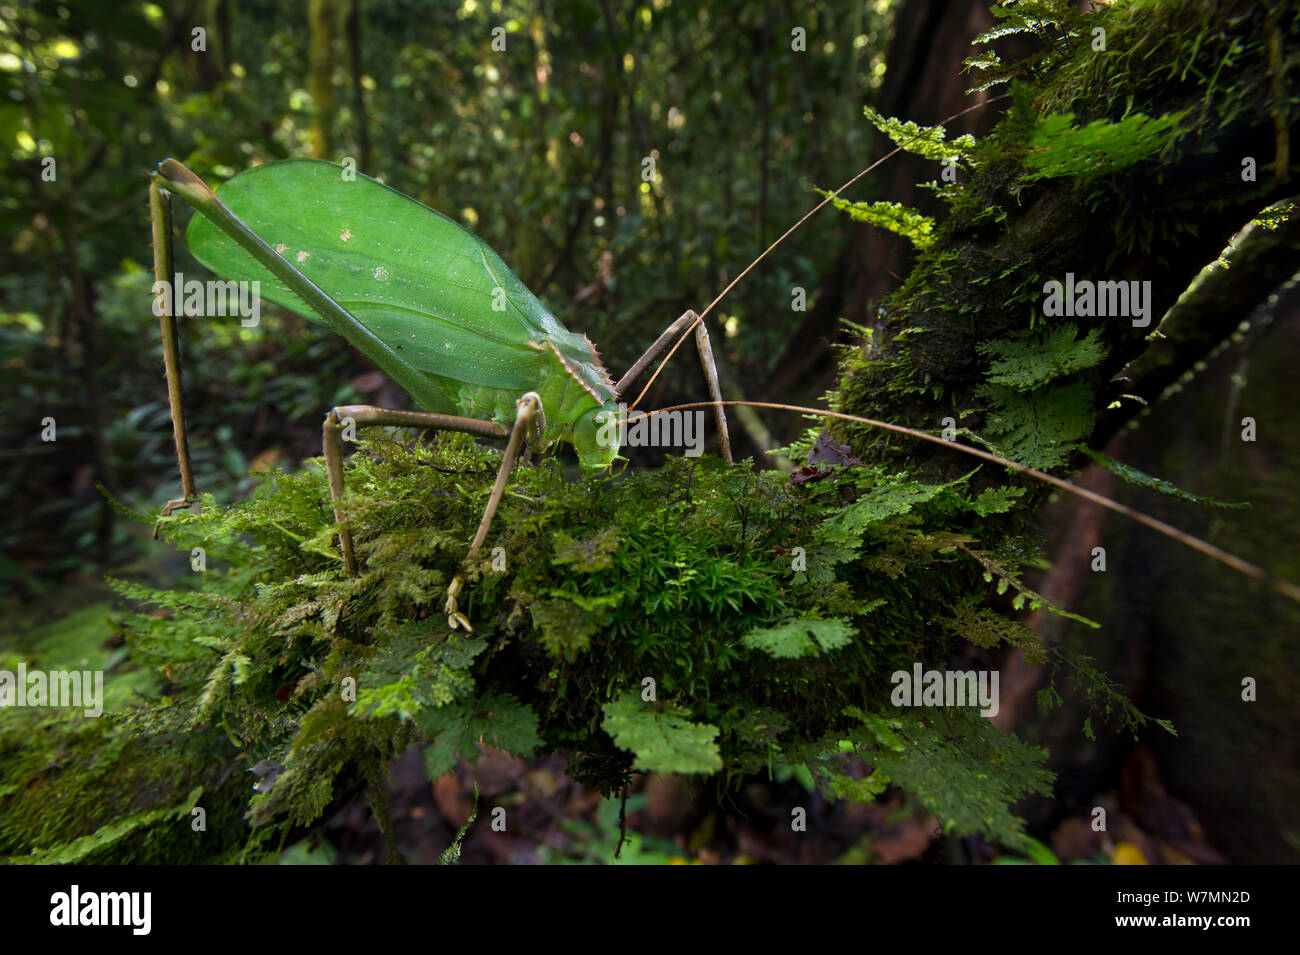 Giant long-horned bush cricket (Macrolyristes imperator) (body length 130mm, hind leg length 150mm, antennae length 170mm) grazing on moss in the understorey. Lowland dipterocarp rainforest, Danum Valley, Sabah, Borneo. Stock Photo